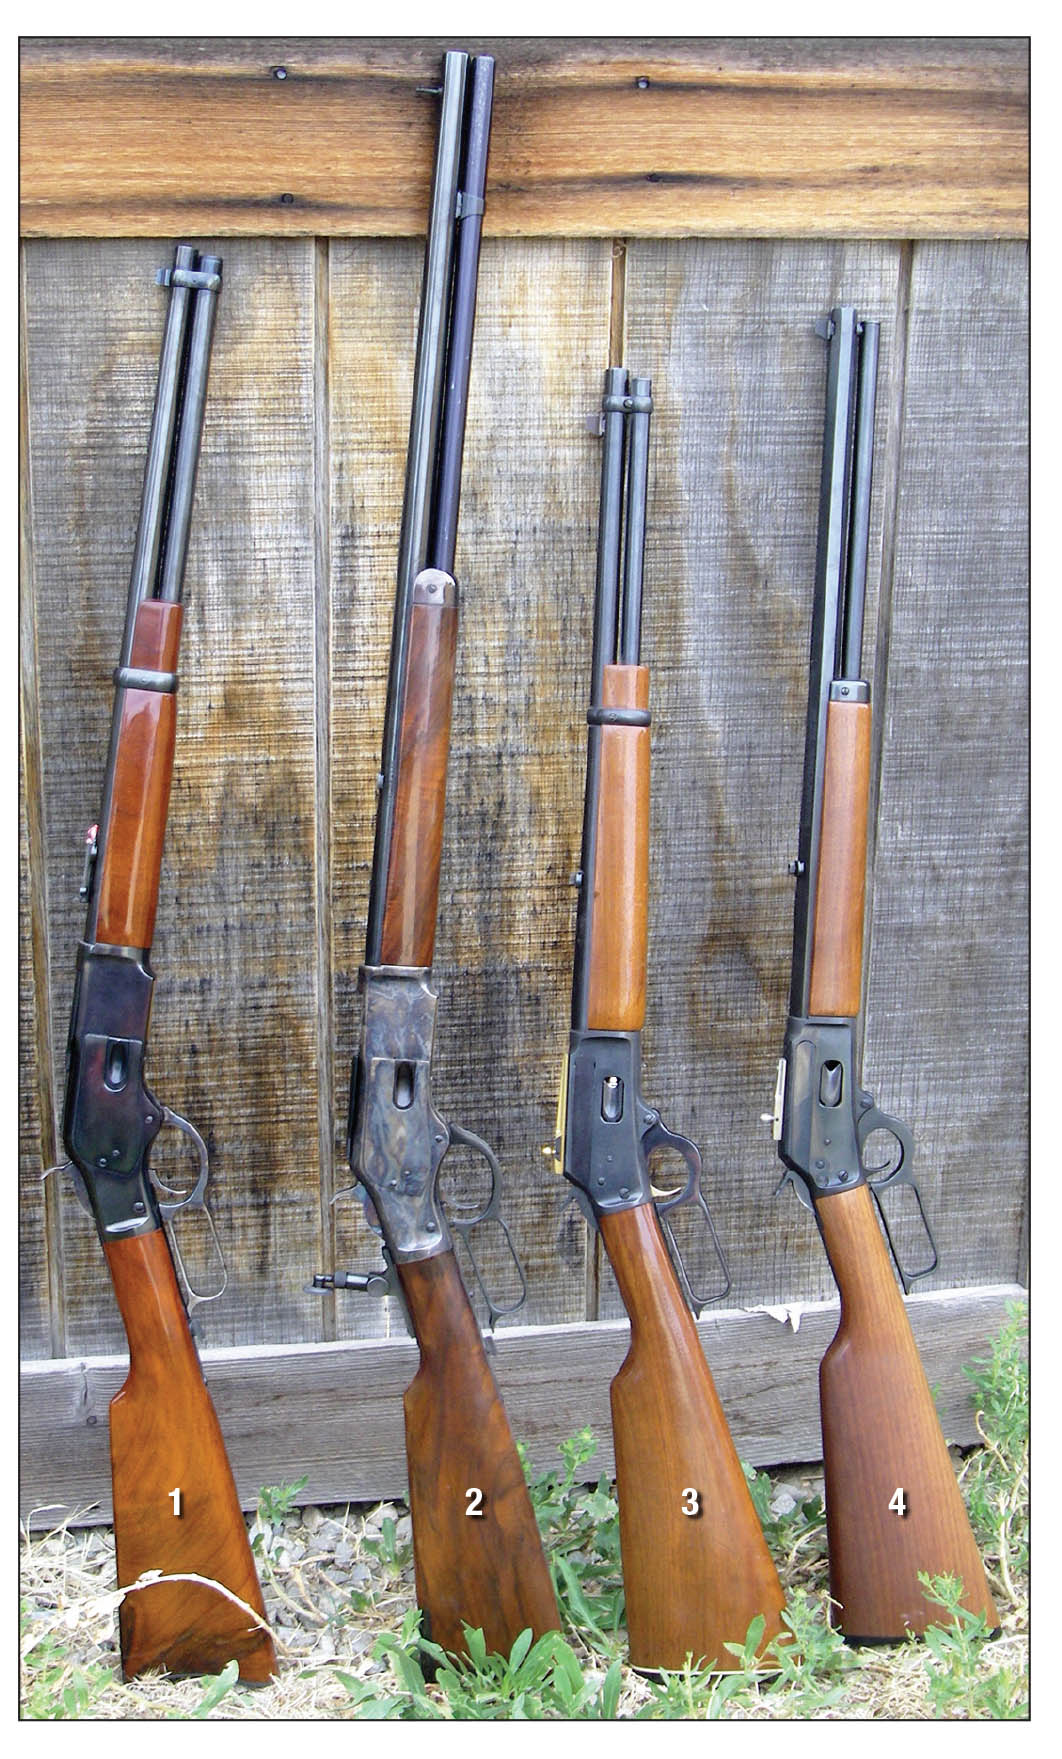 These lever-action rifles were very popular: (1) Uberti 1873 .357 Magnum, (2) Cimarron 1873 Carbine .45 Colt, (3) Marlin 1894 carbine .357 Magnum, (4) Marlin 1894 Cowboy .45 Colt.